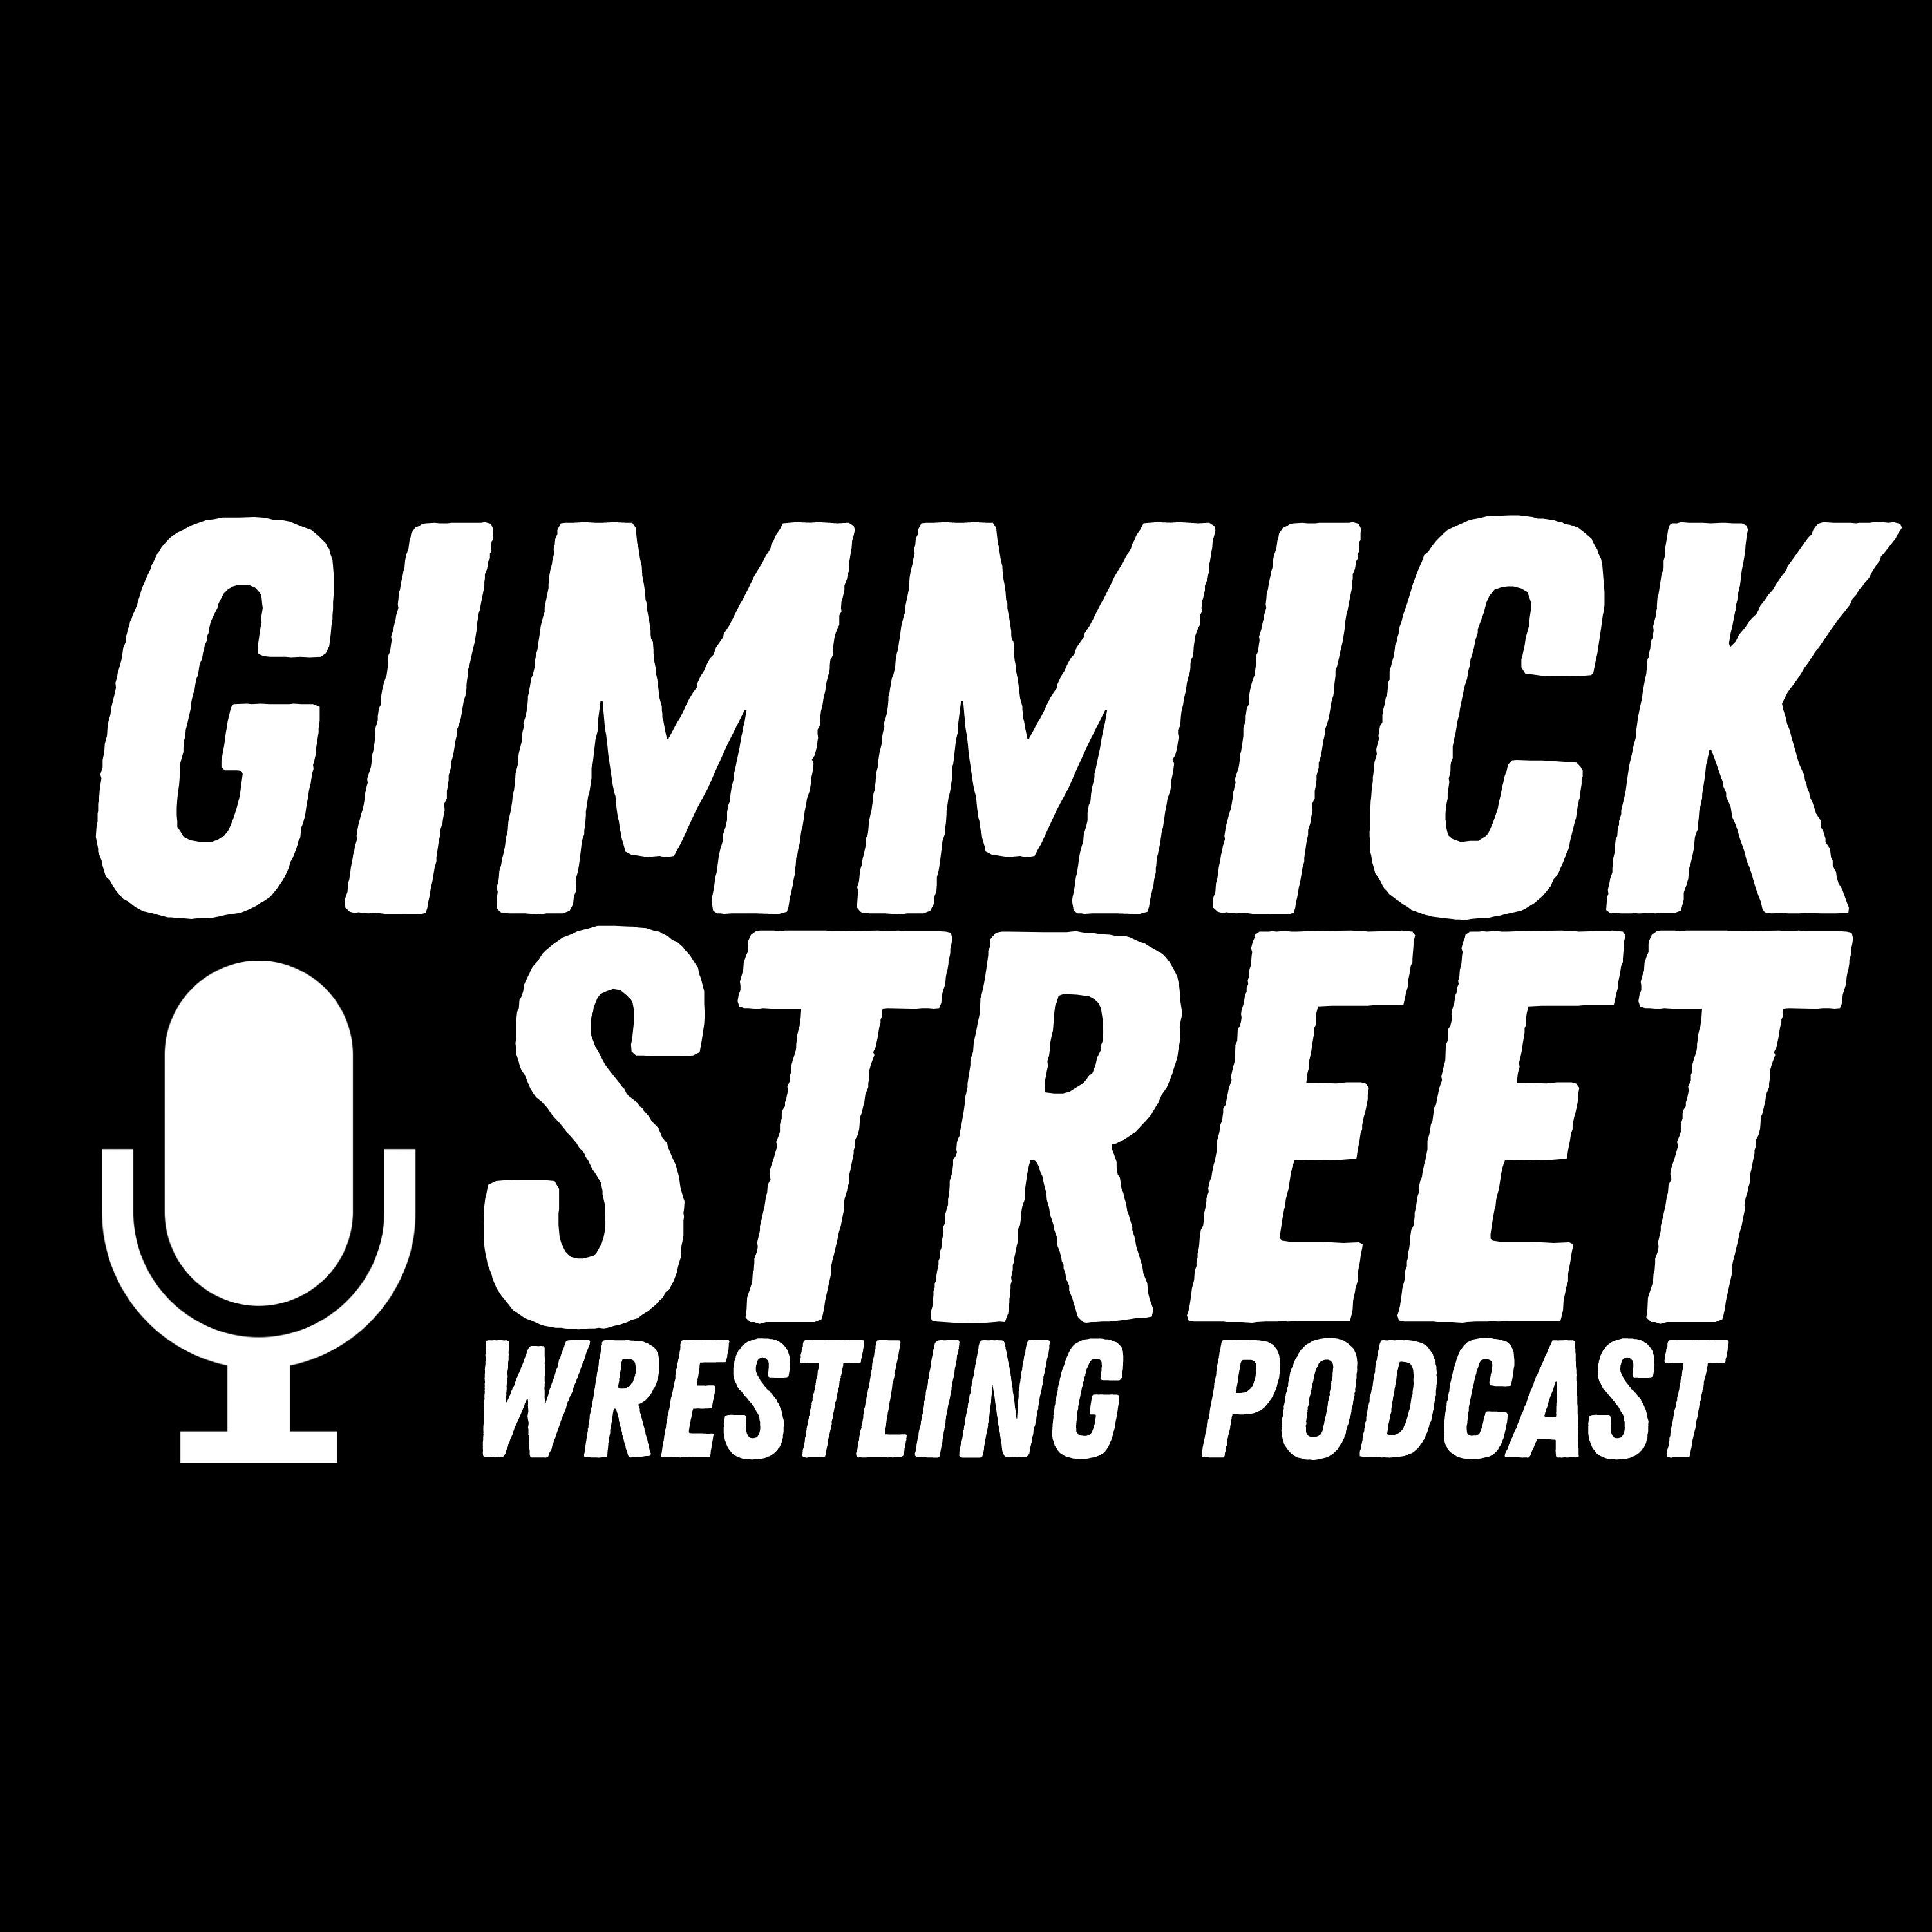 Gimmick Street Wrestling Podcast